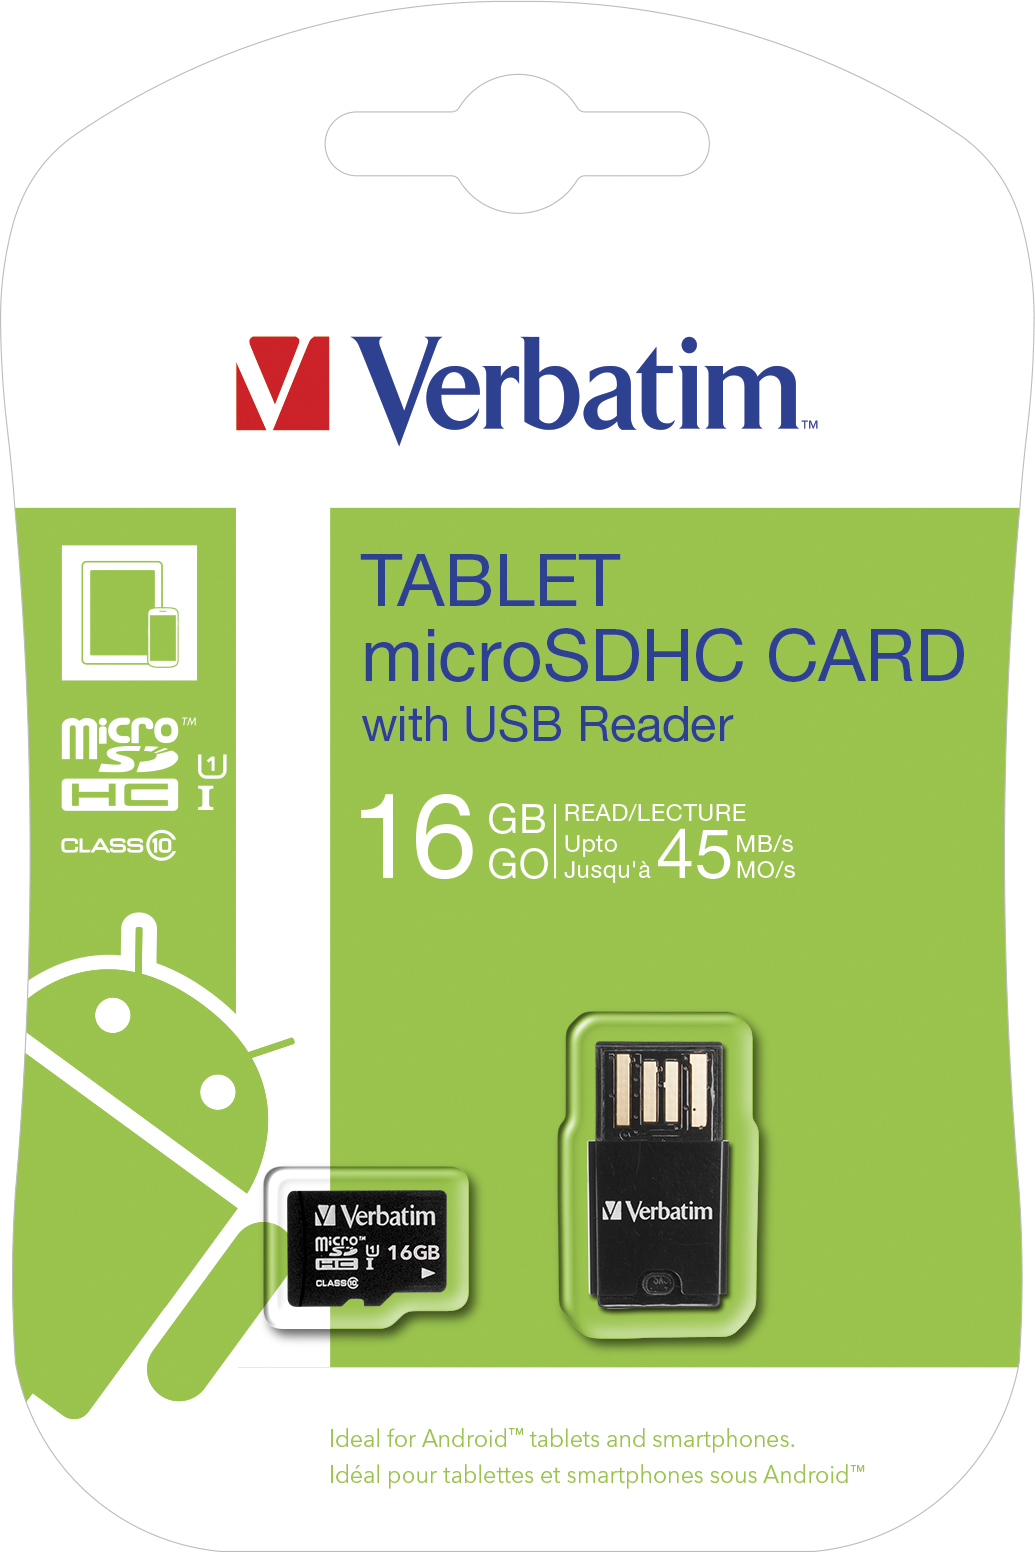 Verbatim Tablette U1 Carte Micro SDHC avec lecteur USB de 16 Go